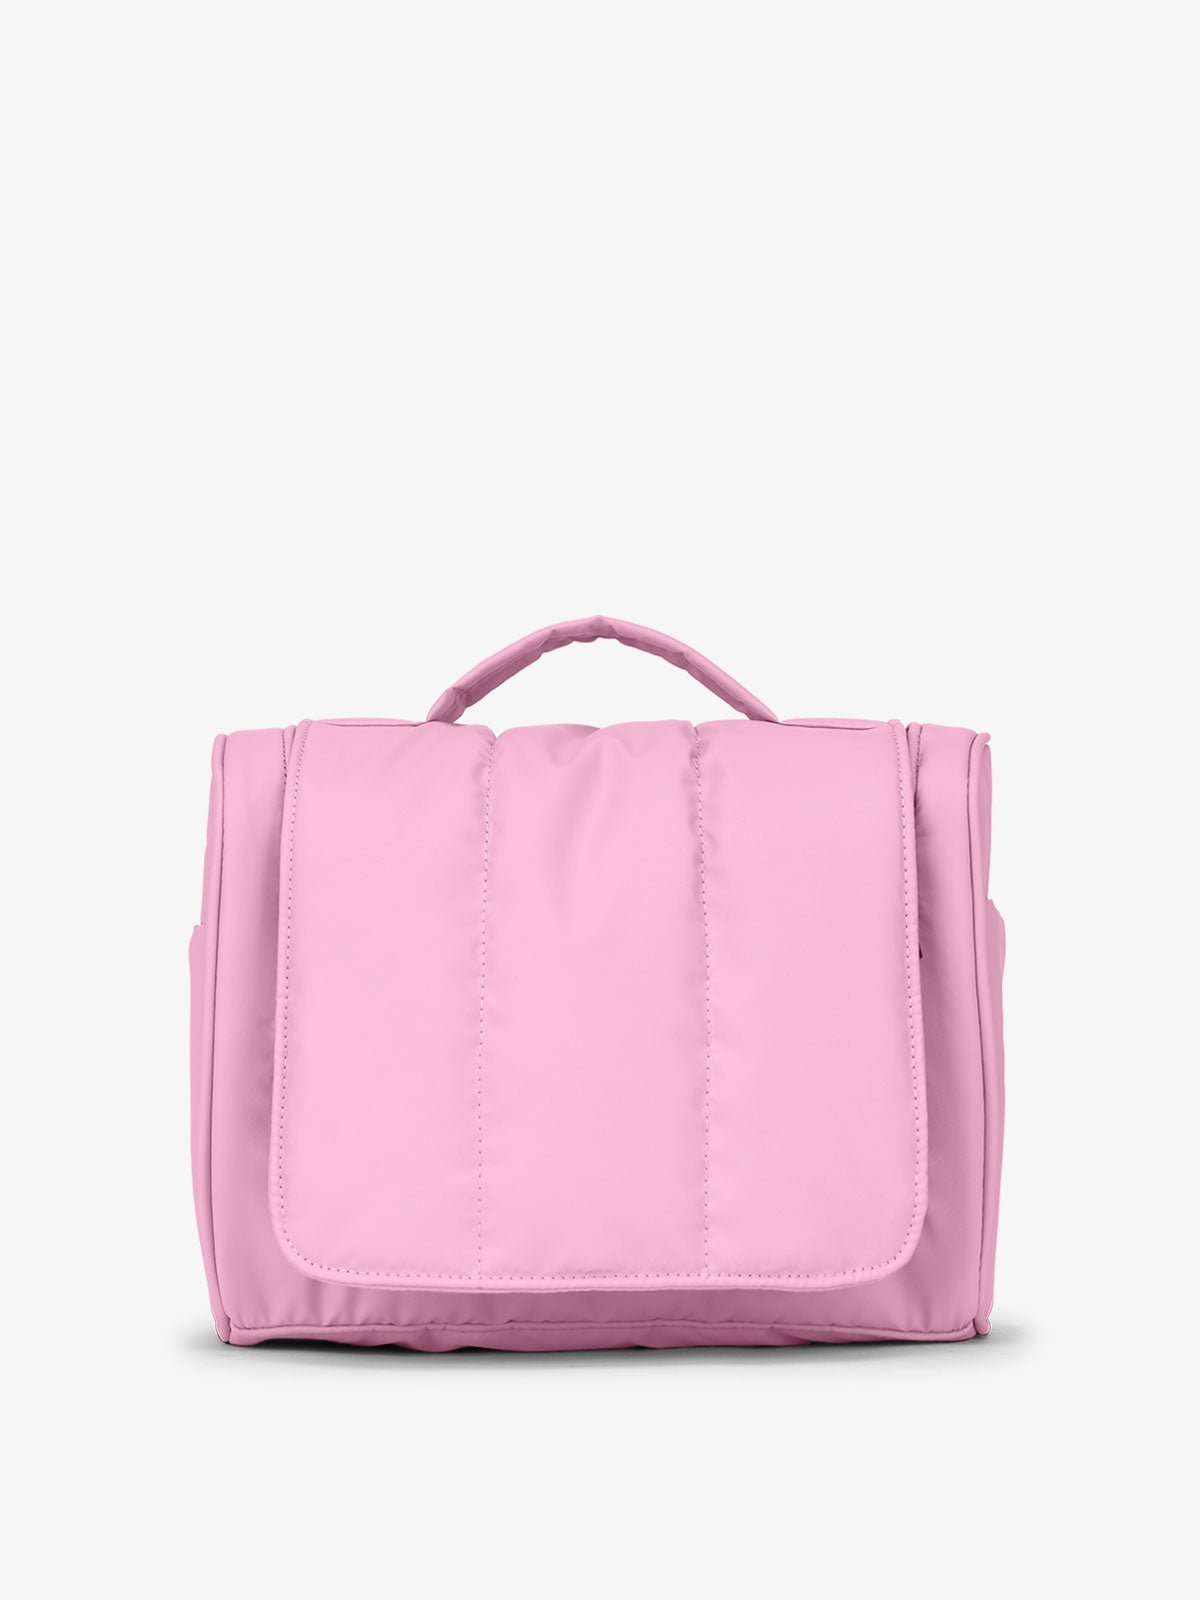 CALPAK Luka Hanging Toiletry Bag with carrying handle in pink bubblegum